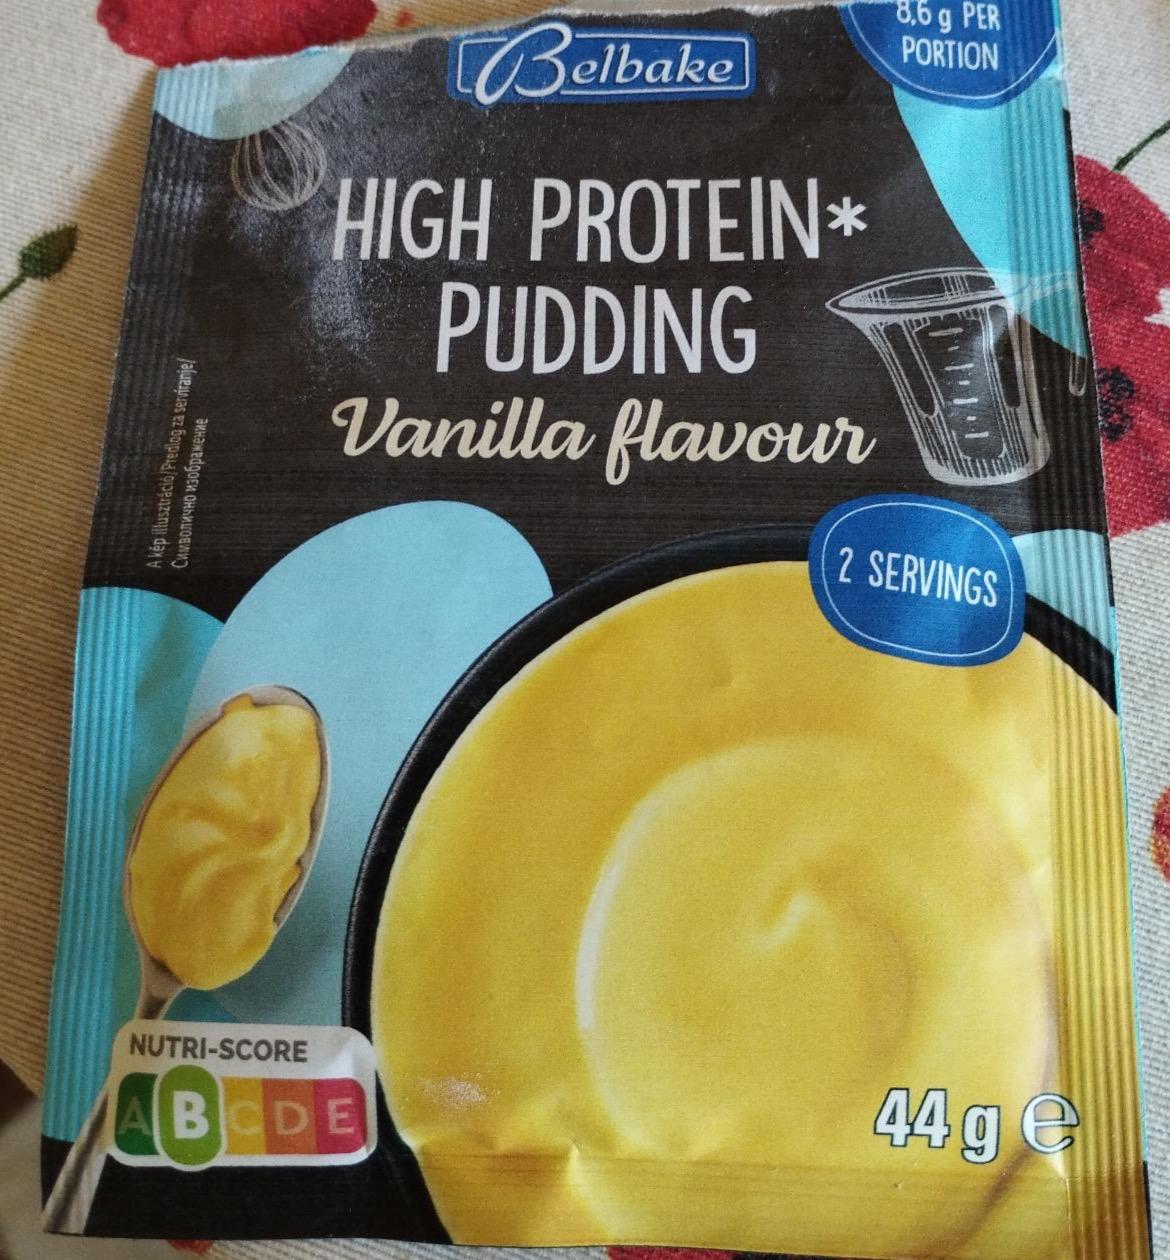 Képek - High protein pudding Vanilla flavour Belbake